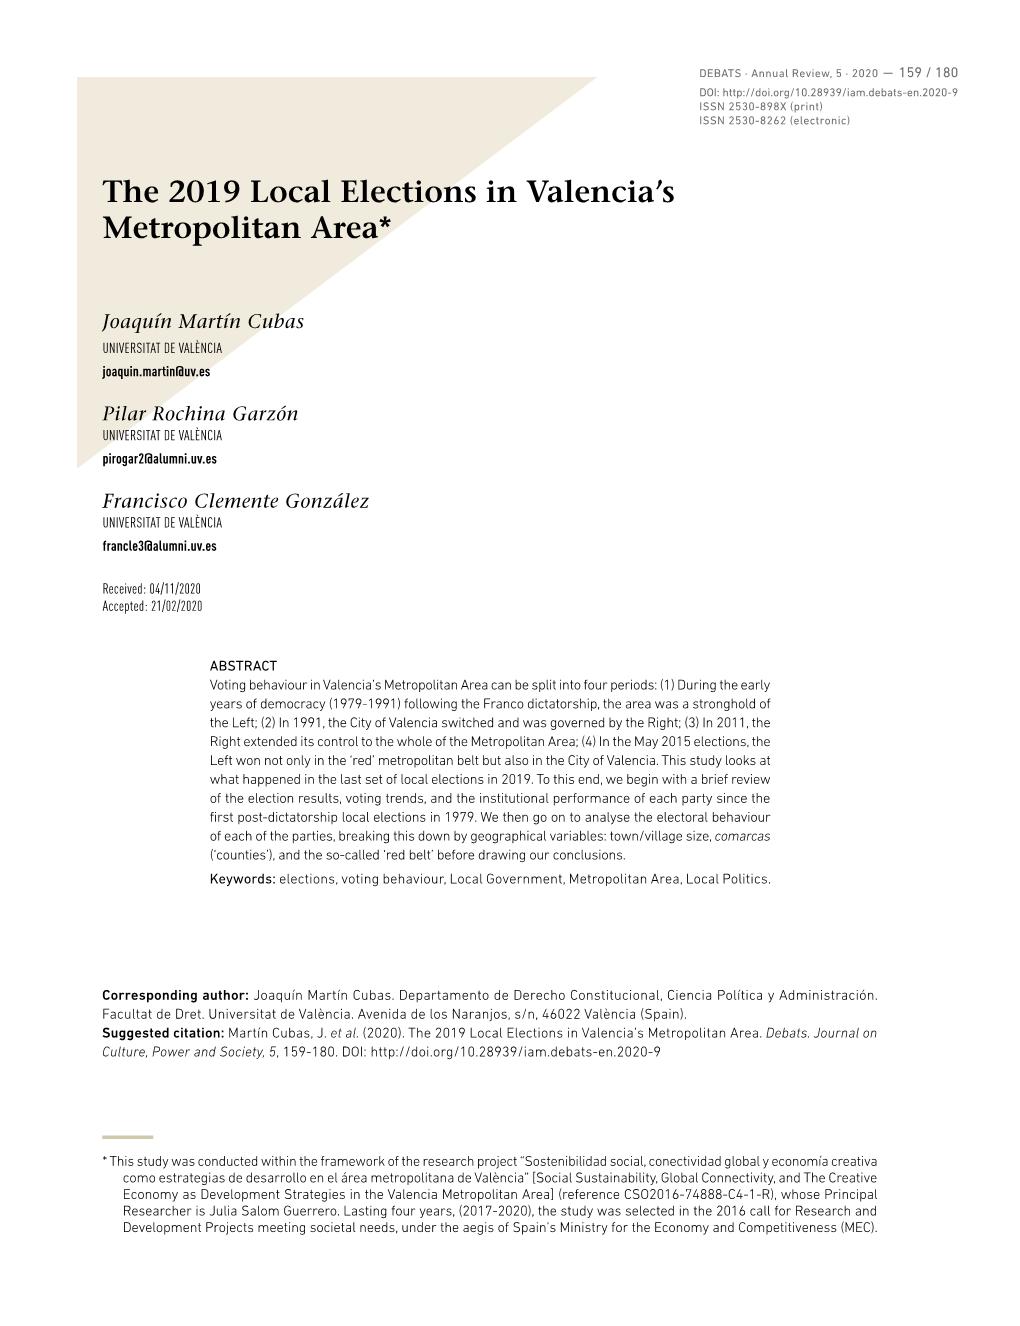 The 2019 Local Elections in Valencia's Metropolitan Area*